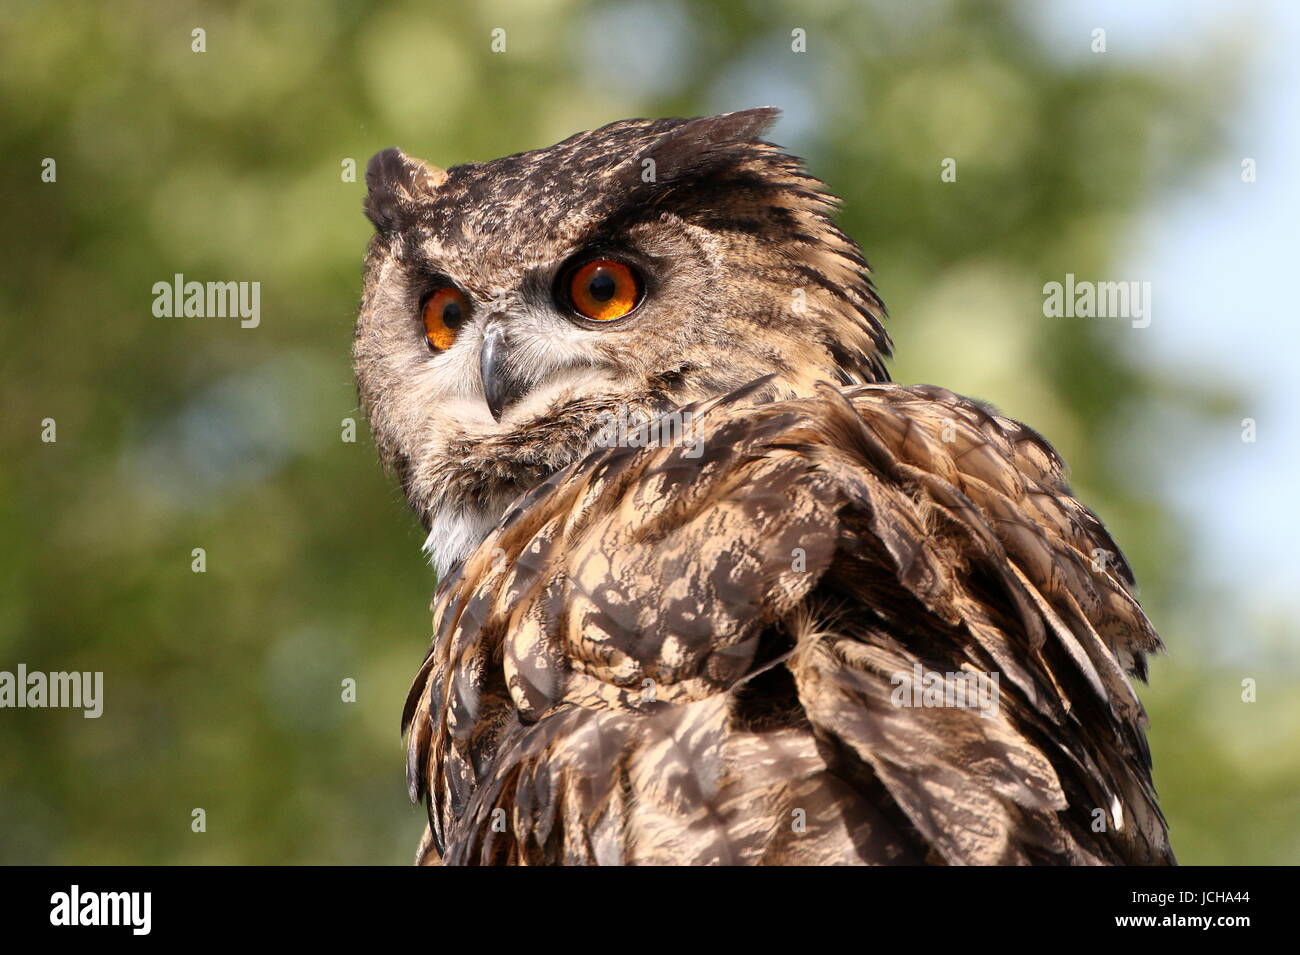 Eurasian eagle owl (Bubo bubo) close-up of the head, facing the lens. Stock Photo